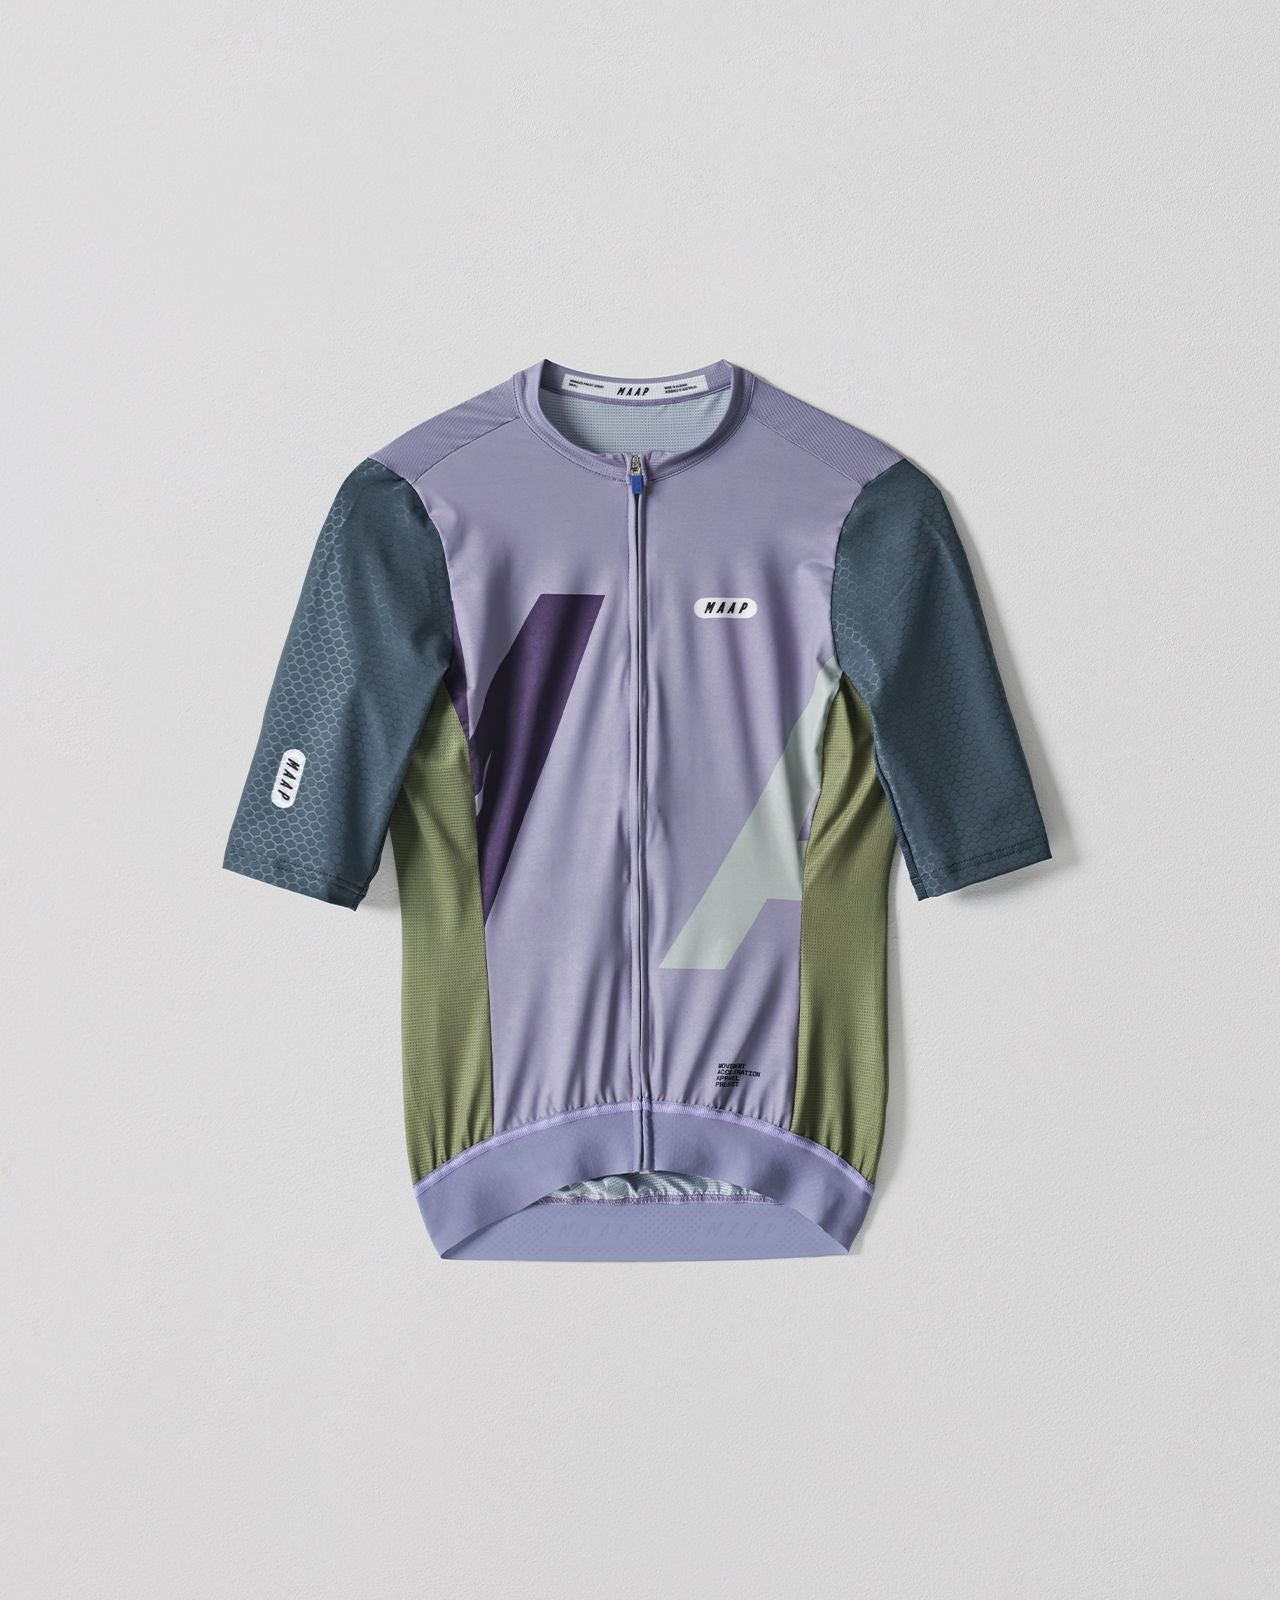 Pro Style Purple Octamesh Jersey